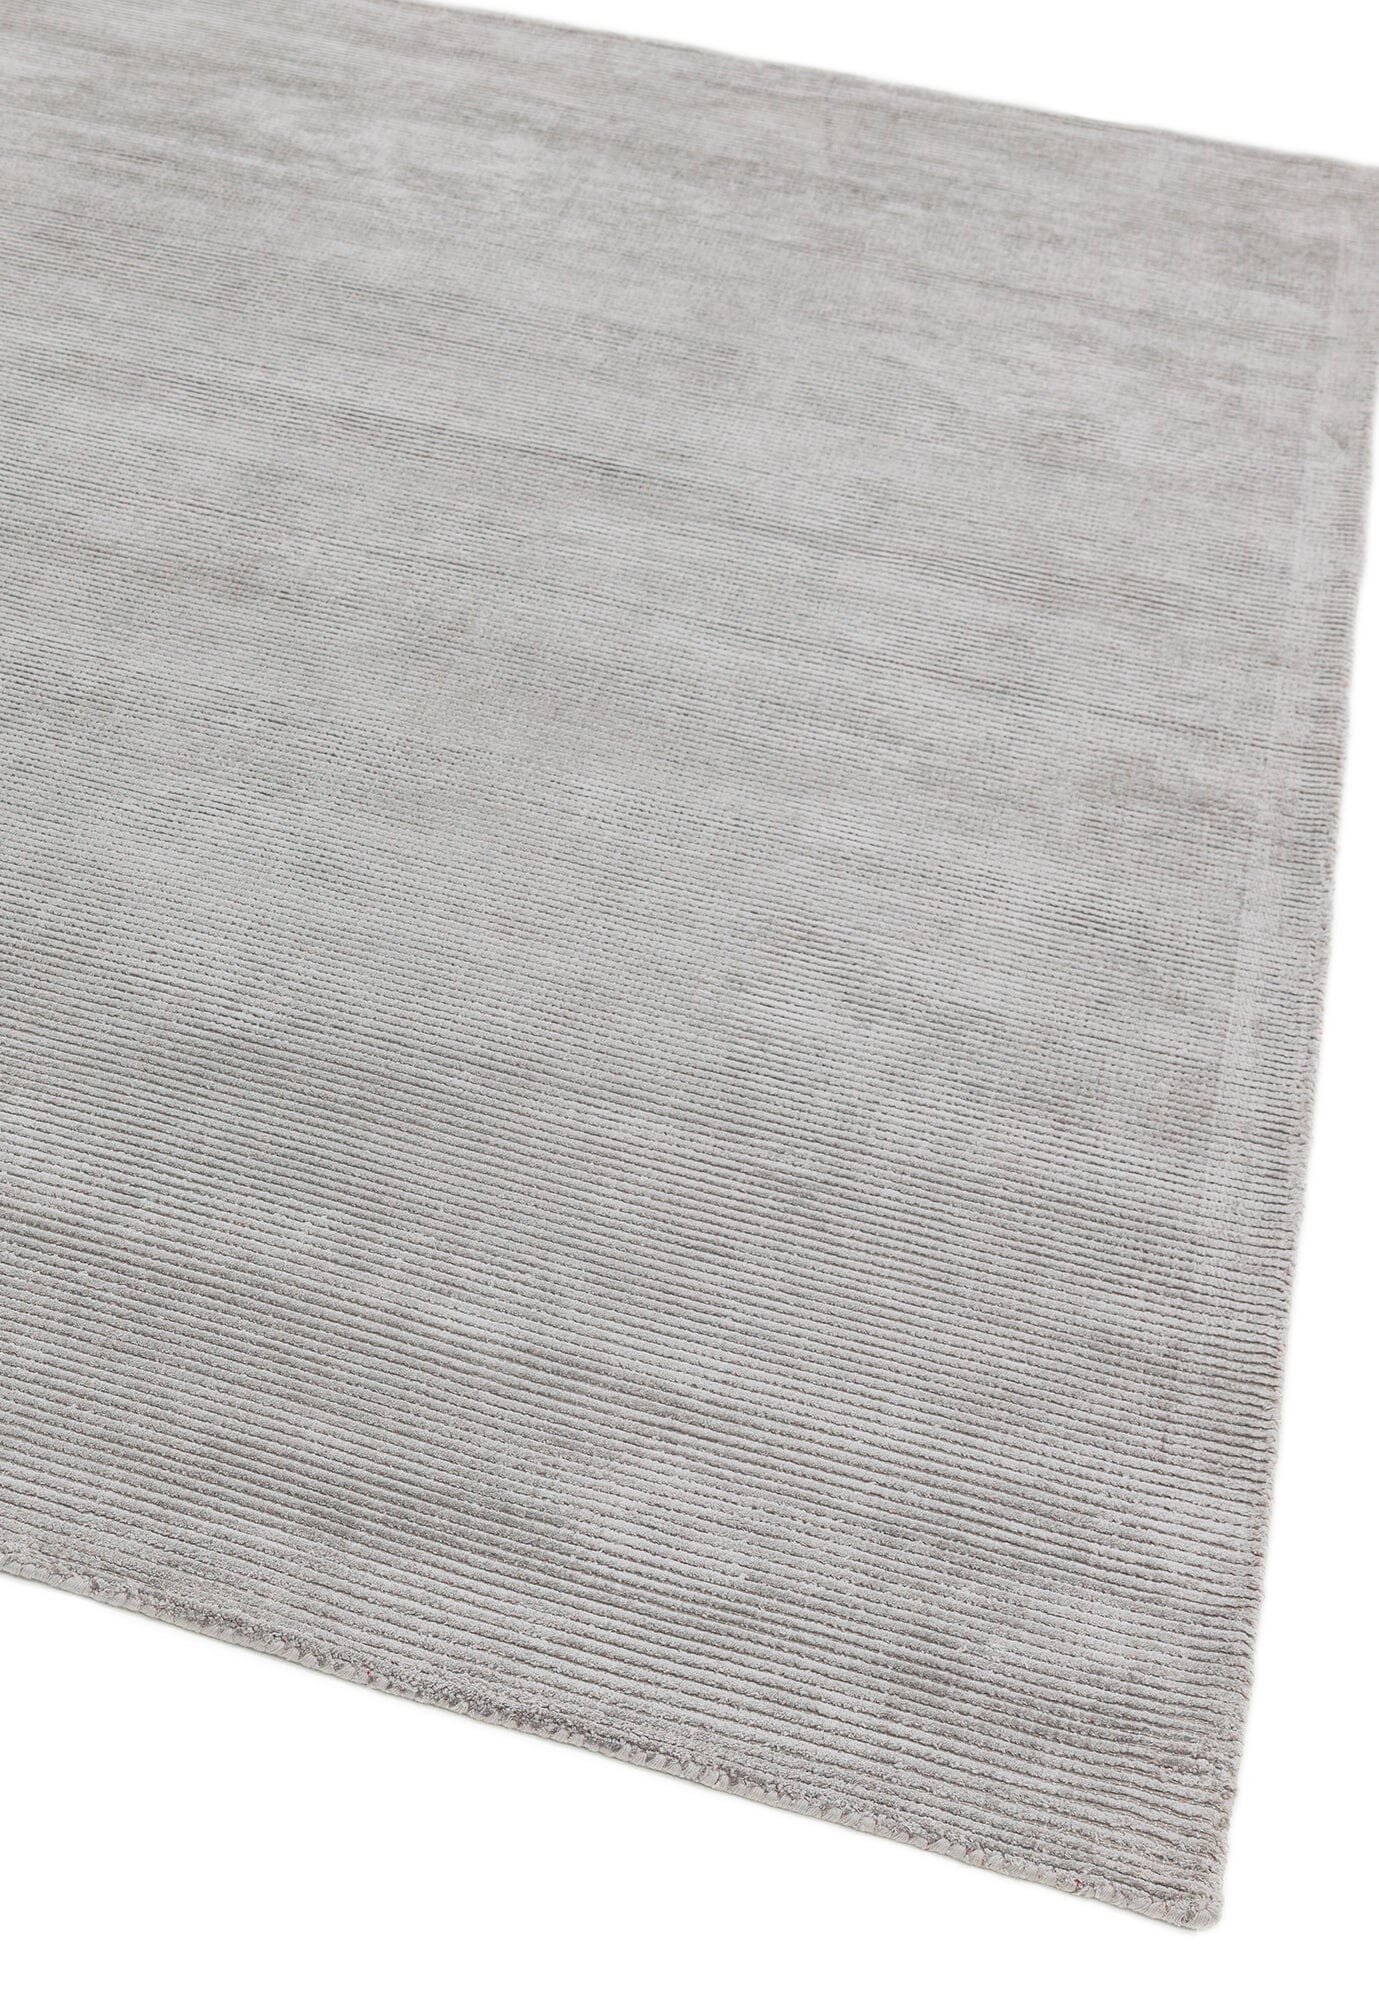 Asiatic Carpets Reko Hand Woven Rug Silver - 160 x 230cm